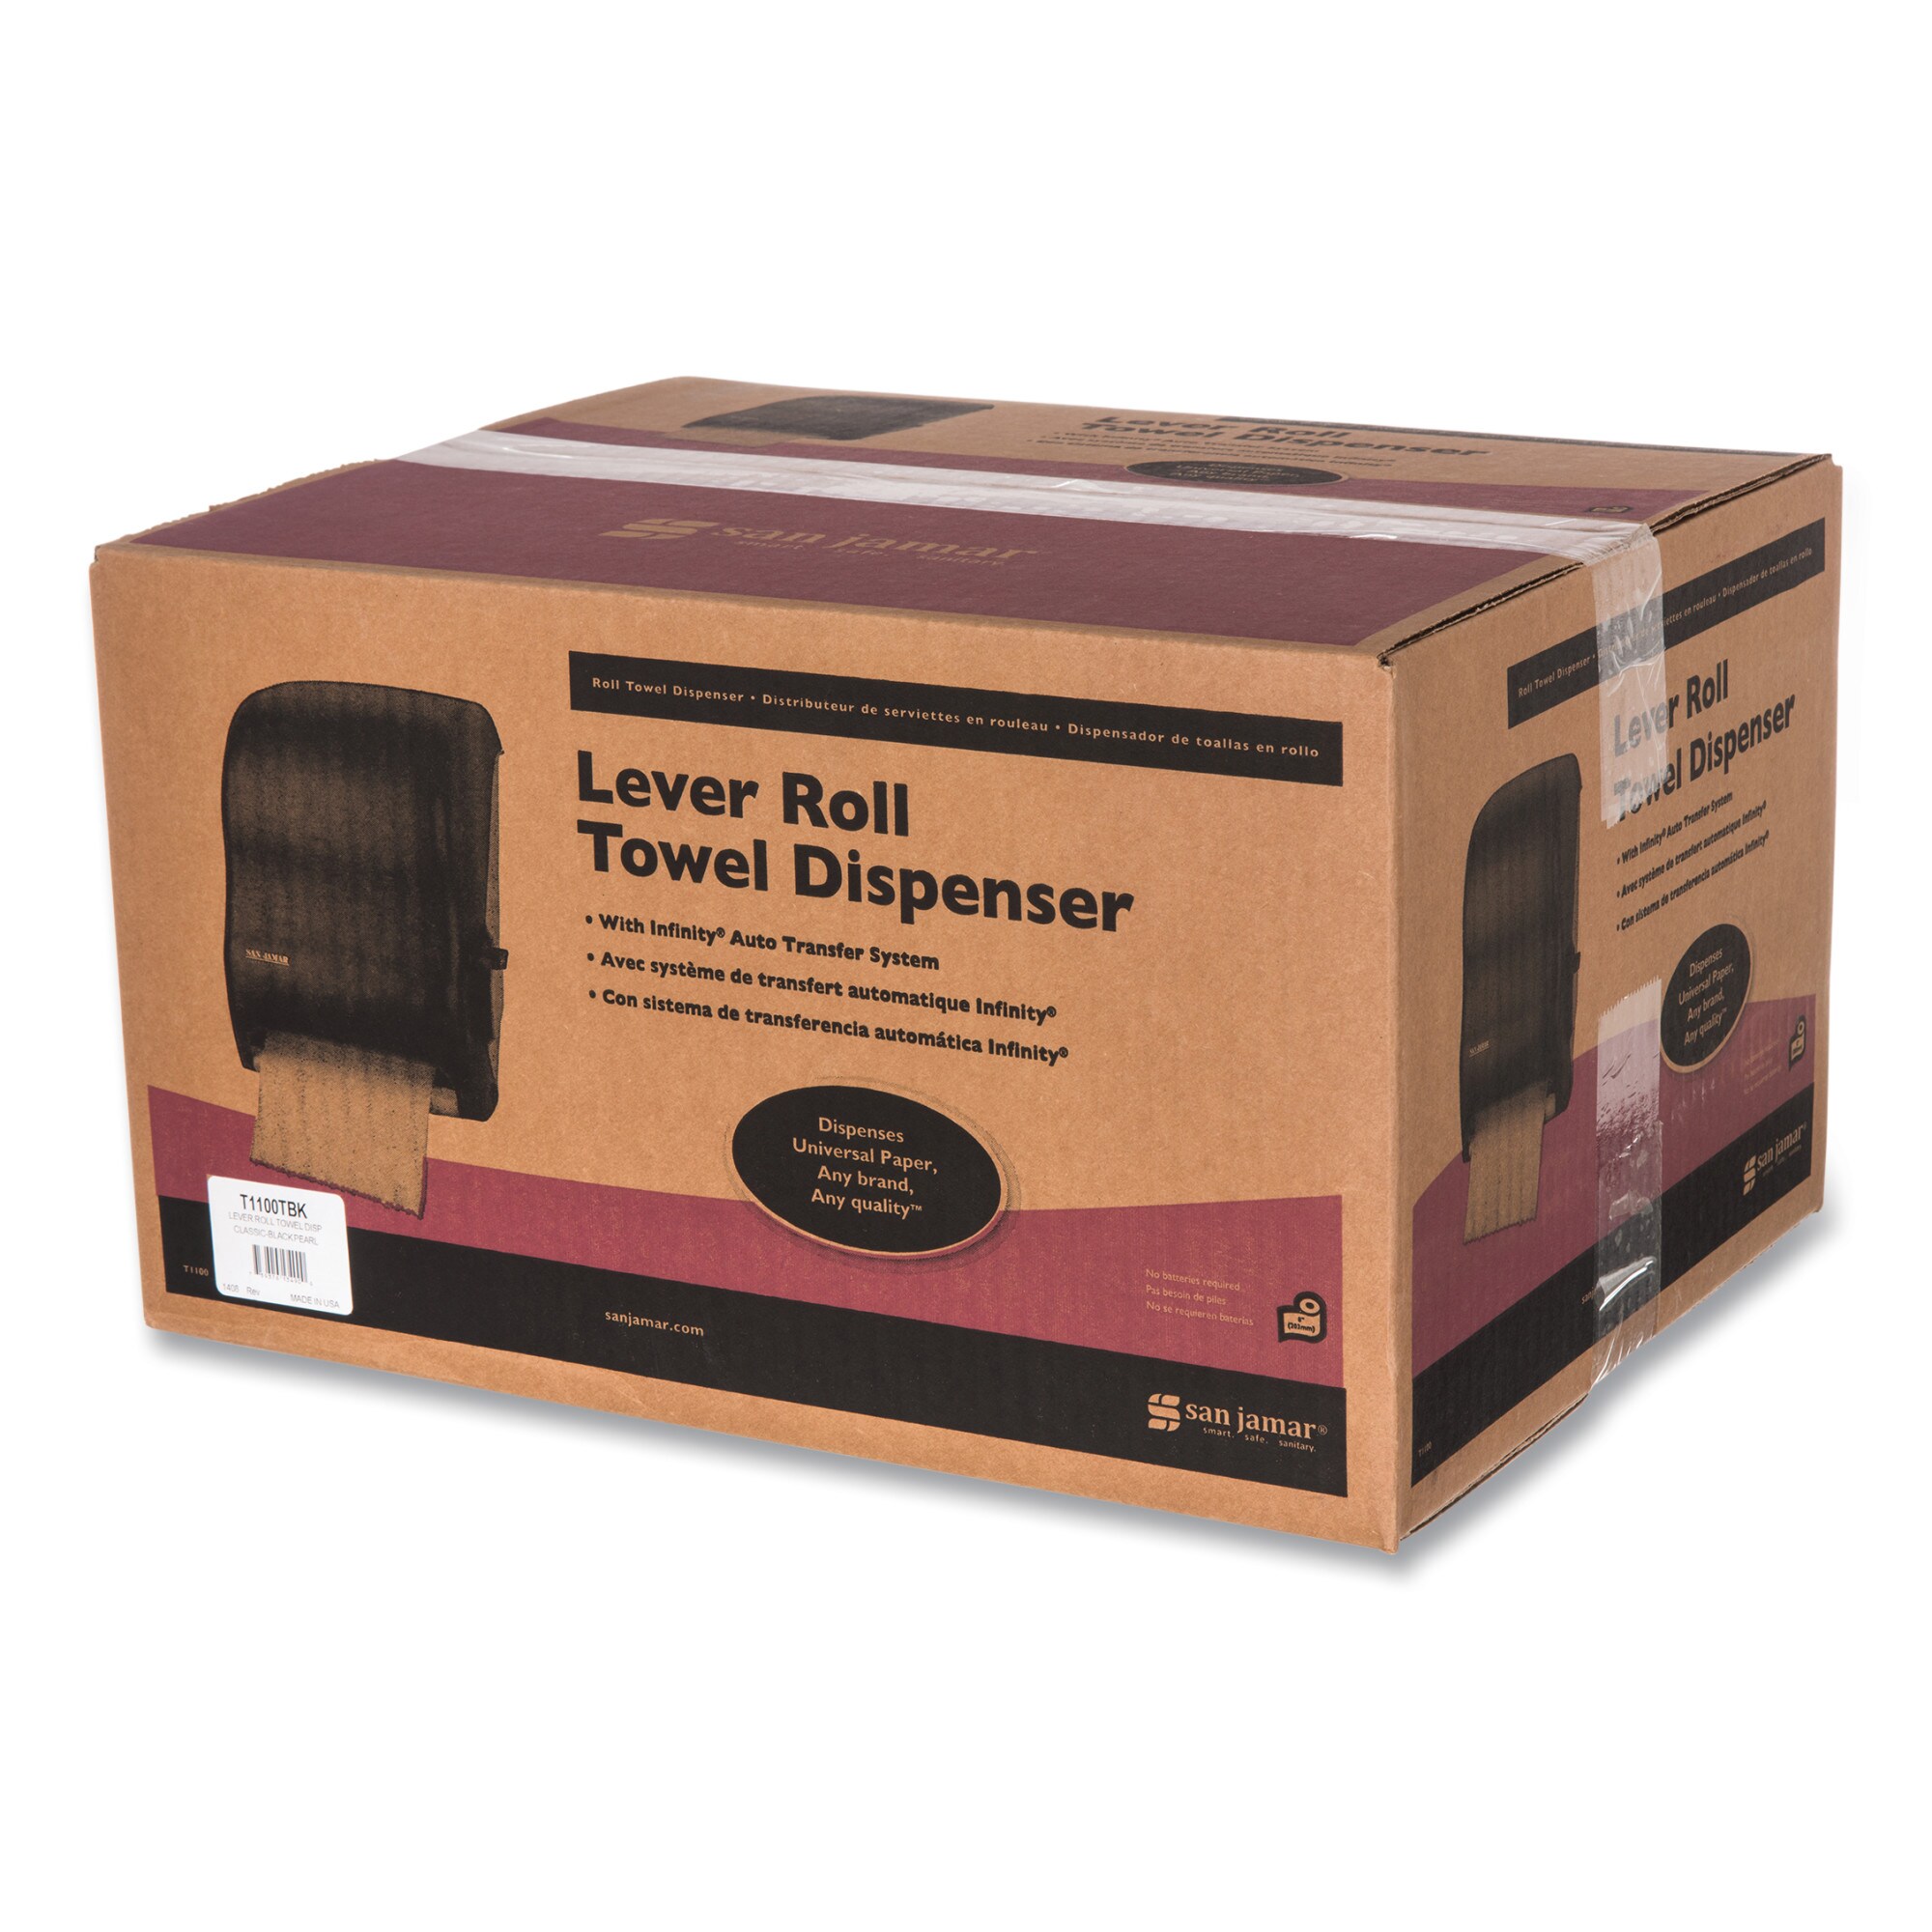 San Jamar Transparent Black Pearl Lever Control Paper Towel